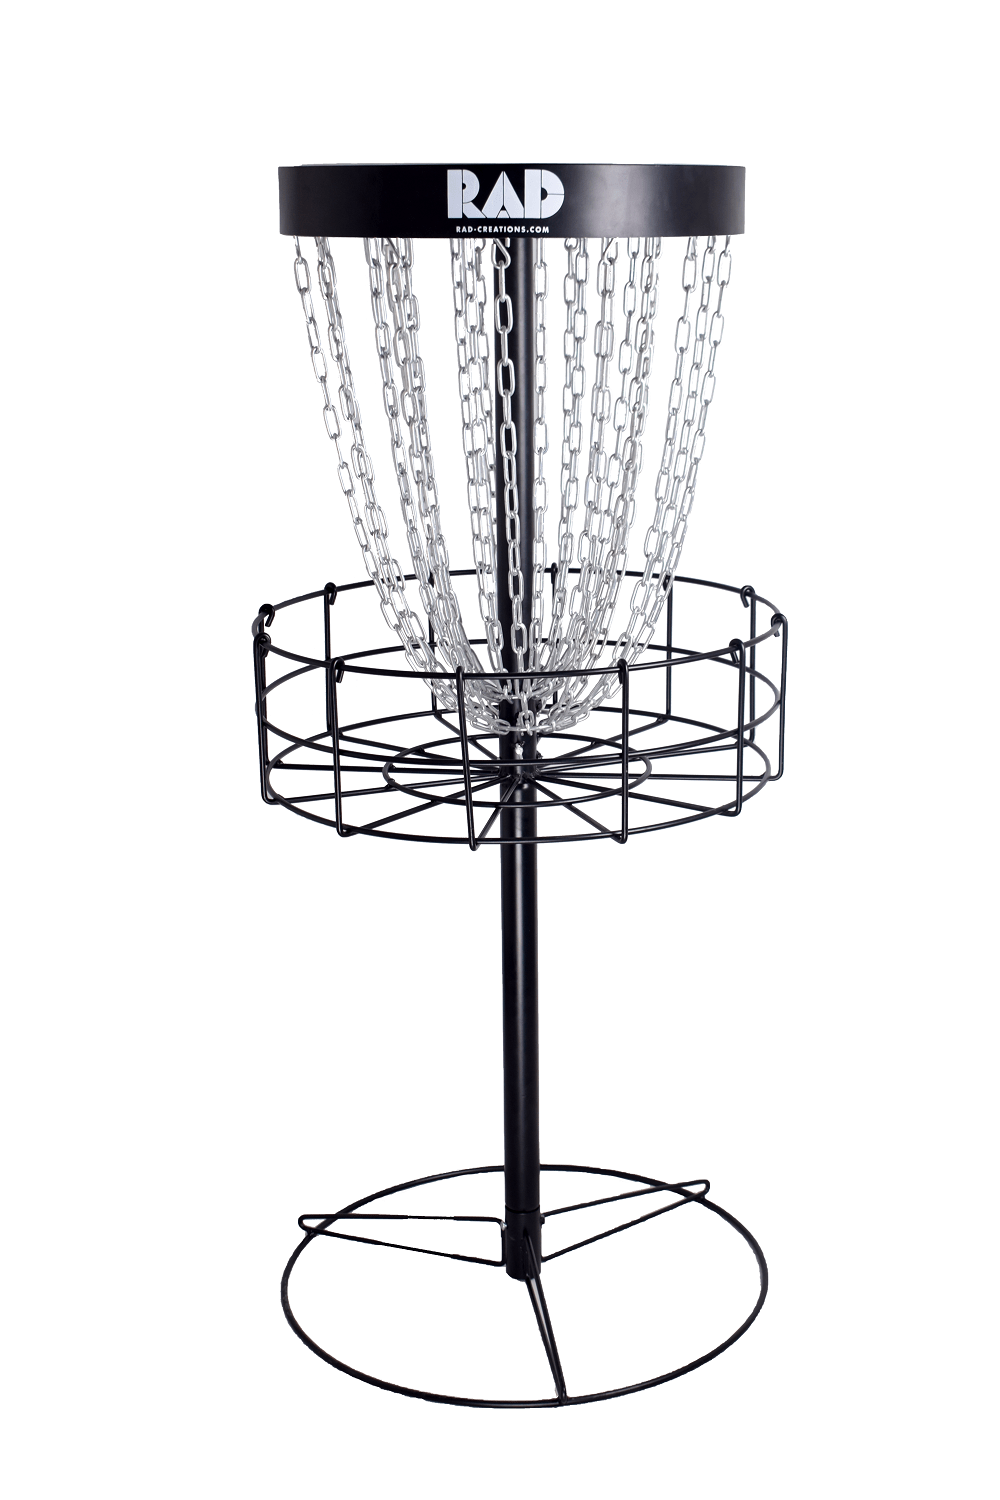 RAD Creations Basket Black RAD Eagle Premium 24-Chain Disc Golf Basket